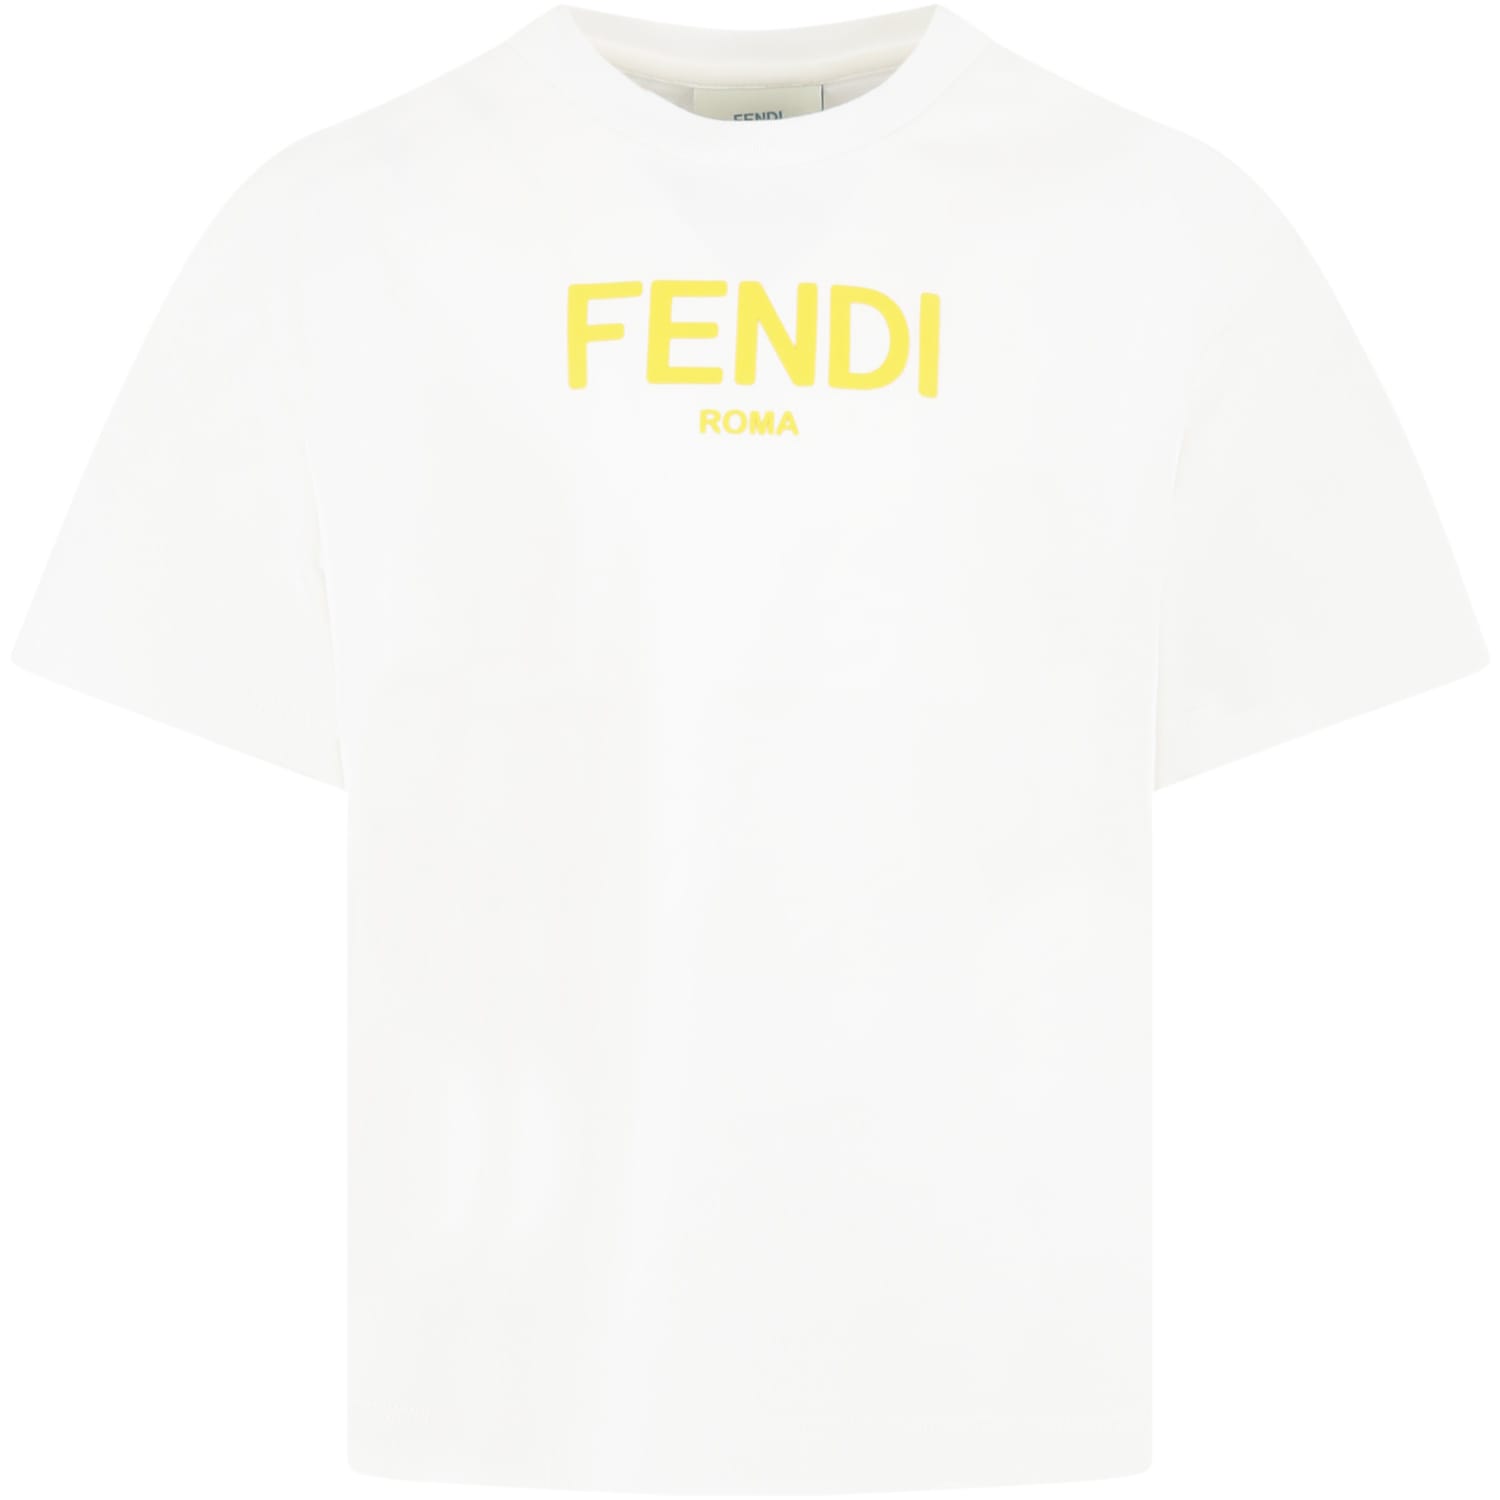 Fendi White T-shirt For Kids With Yellow Logo